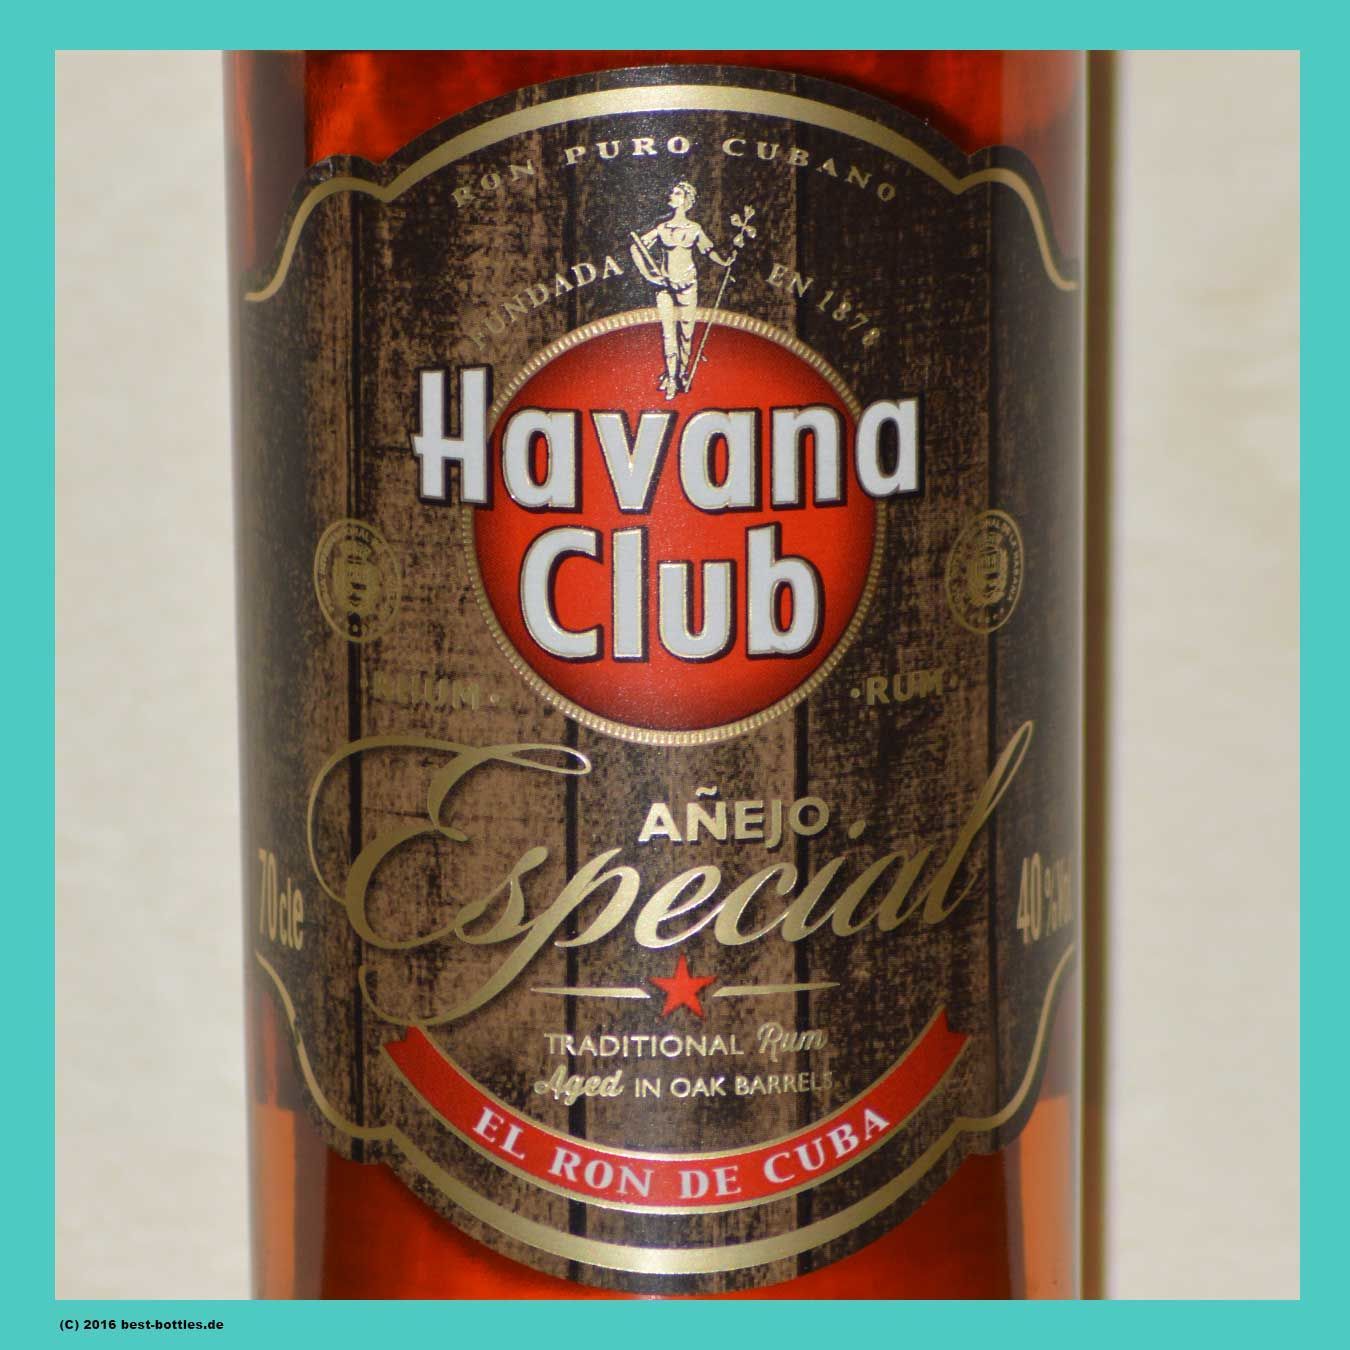 Havana Club Especial 0,7 RUM Añejo l